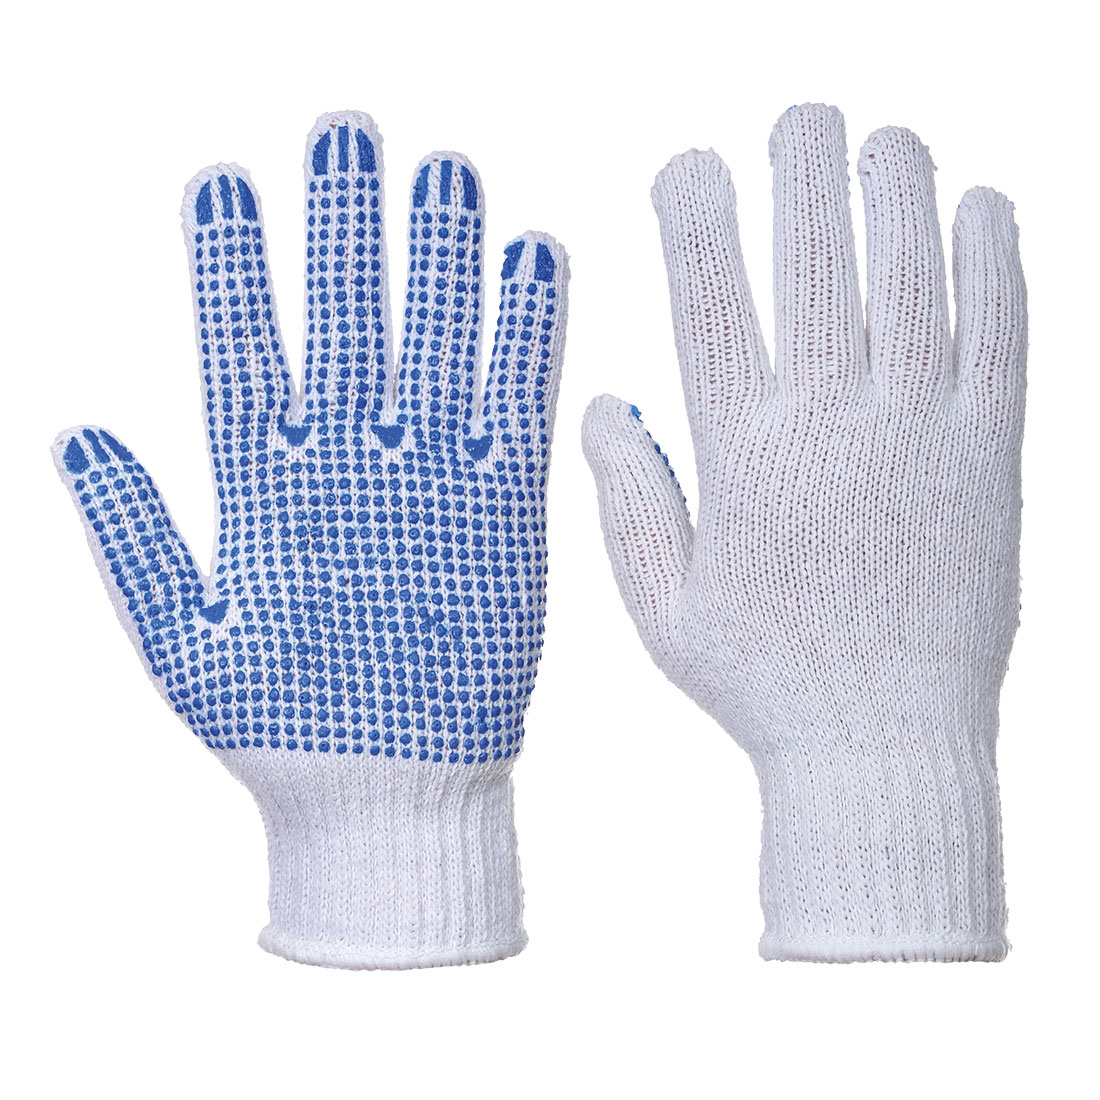 Classic Polka Dot Glove White/blue Size XL - 12 Pack